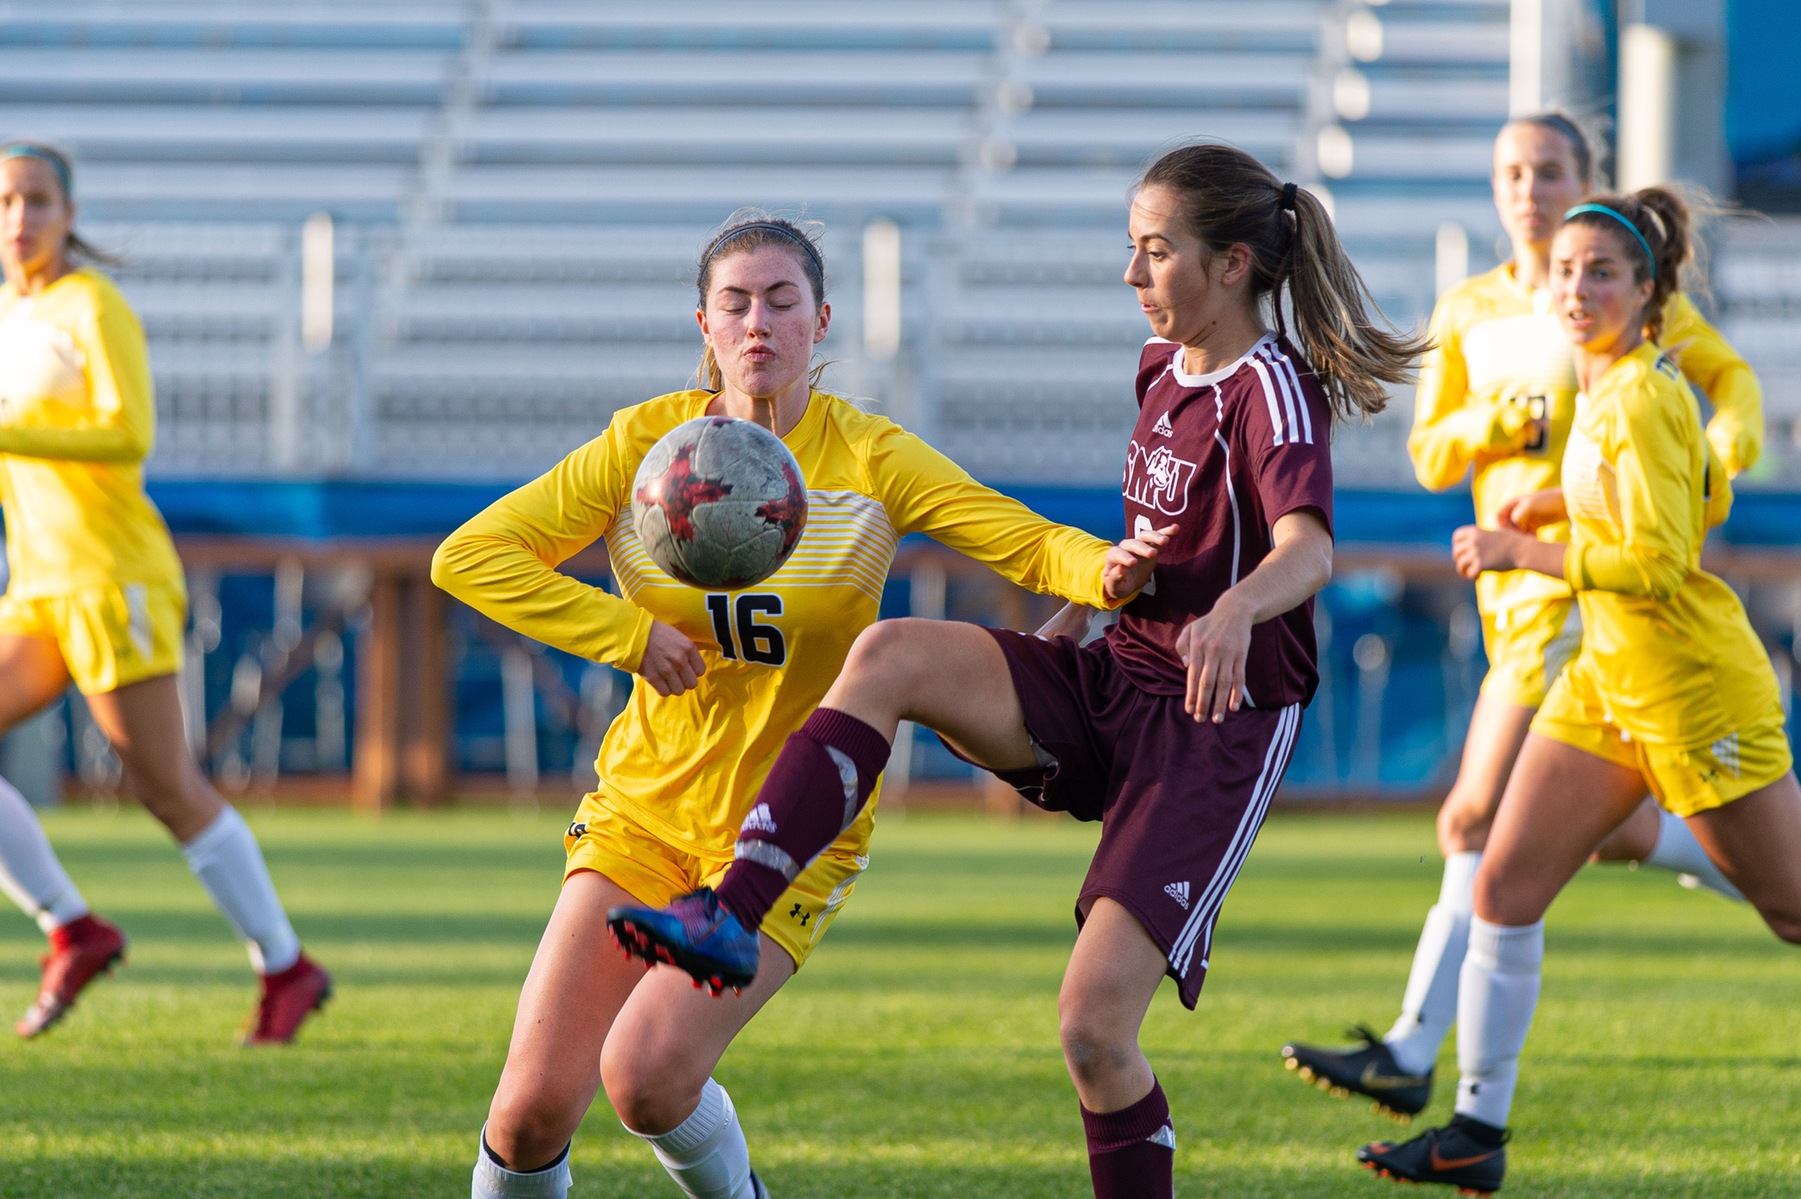 Dalhousie tops SMU in women's soccer action